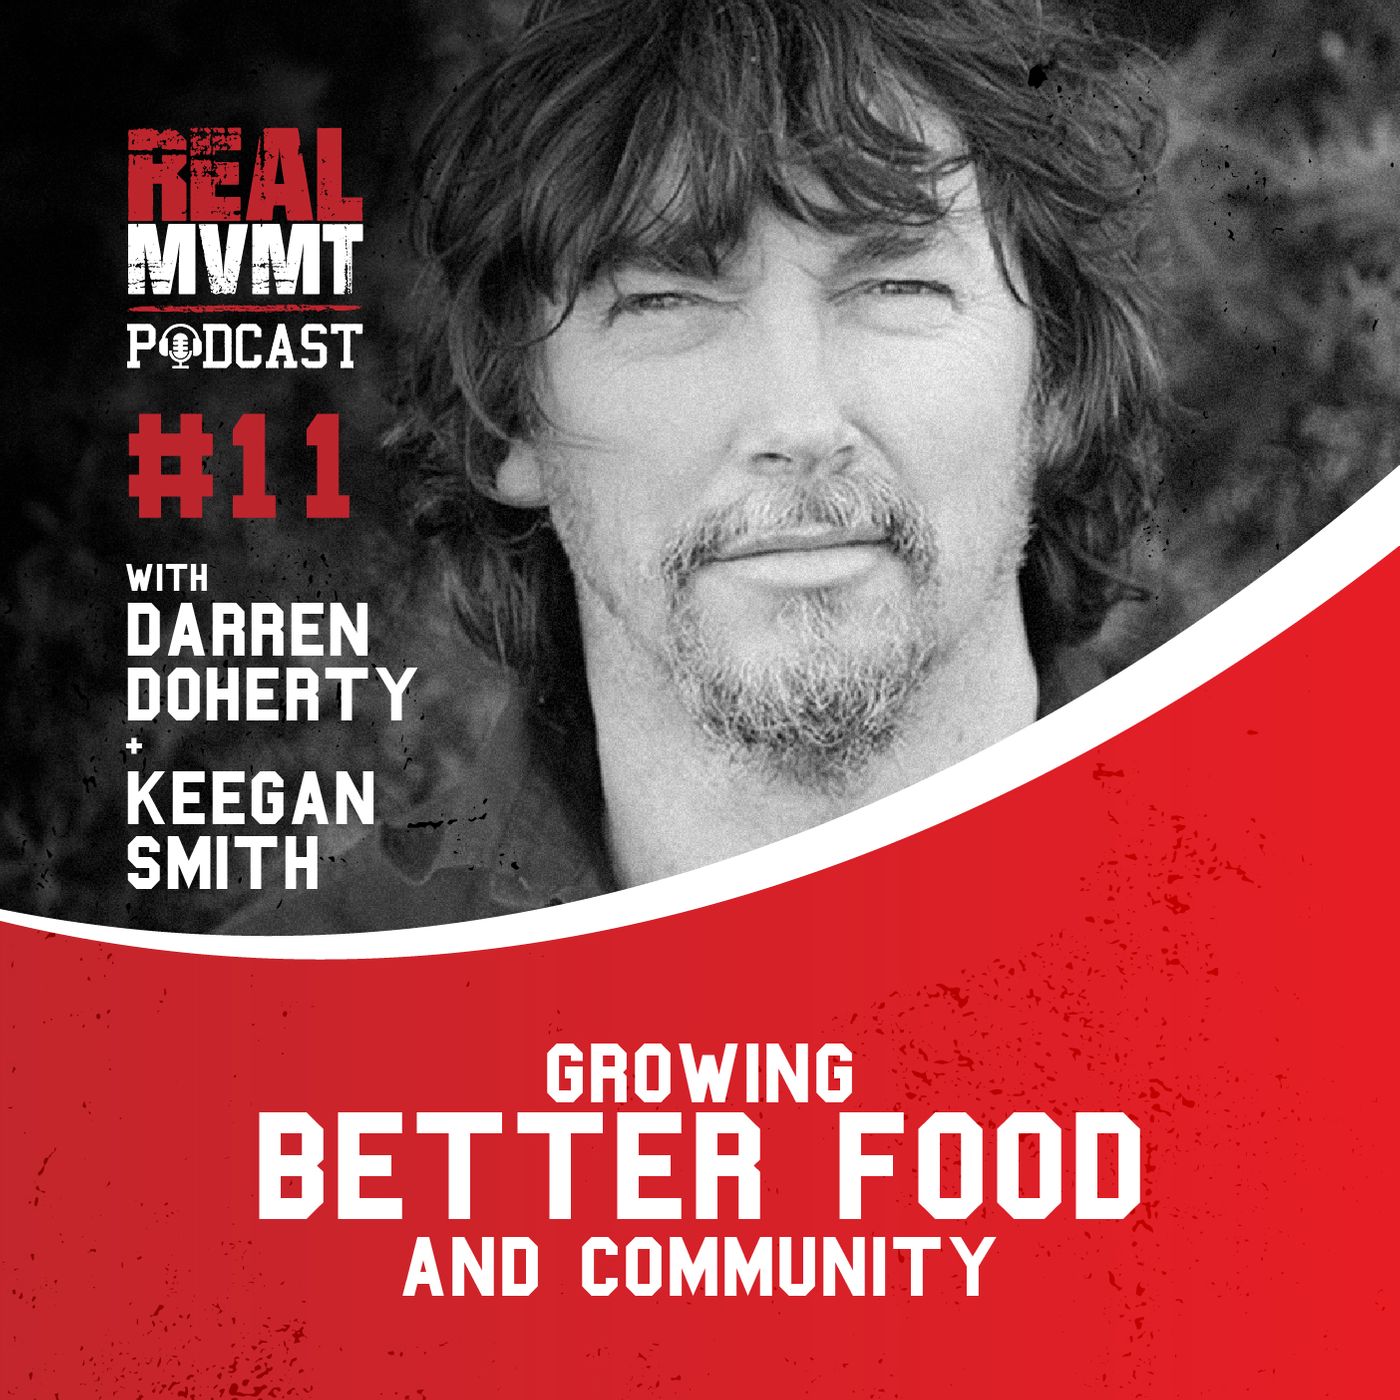 Growing Better Food and Community - Darren Doherty & Keegan Smith